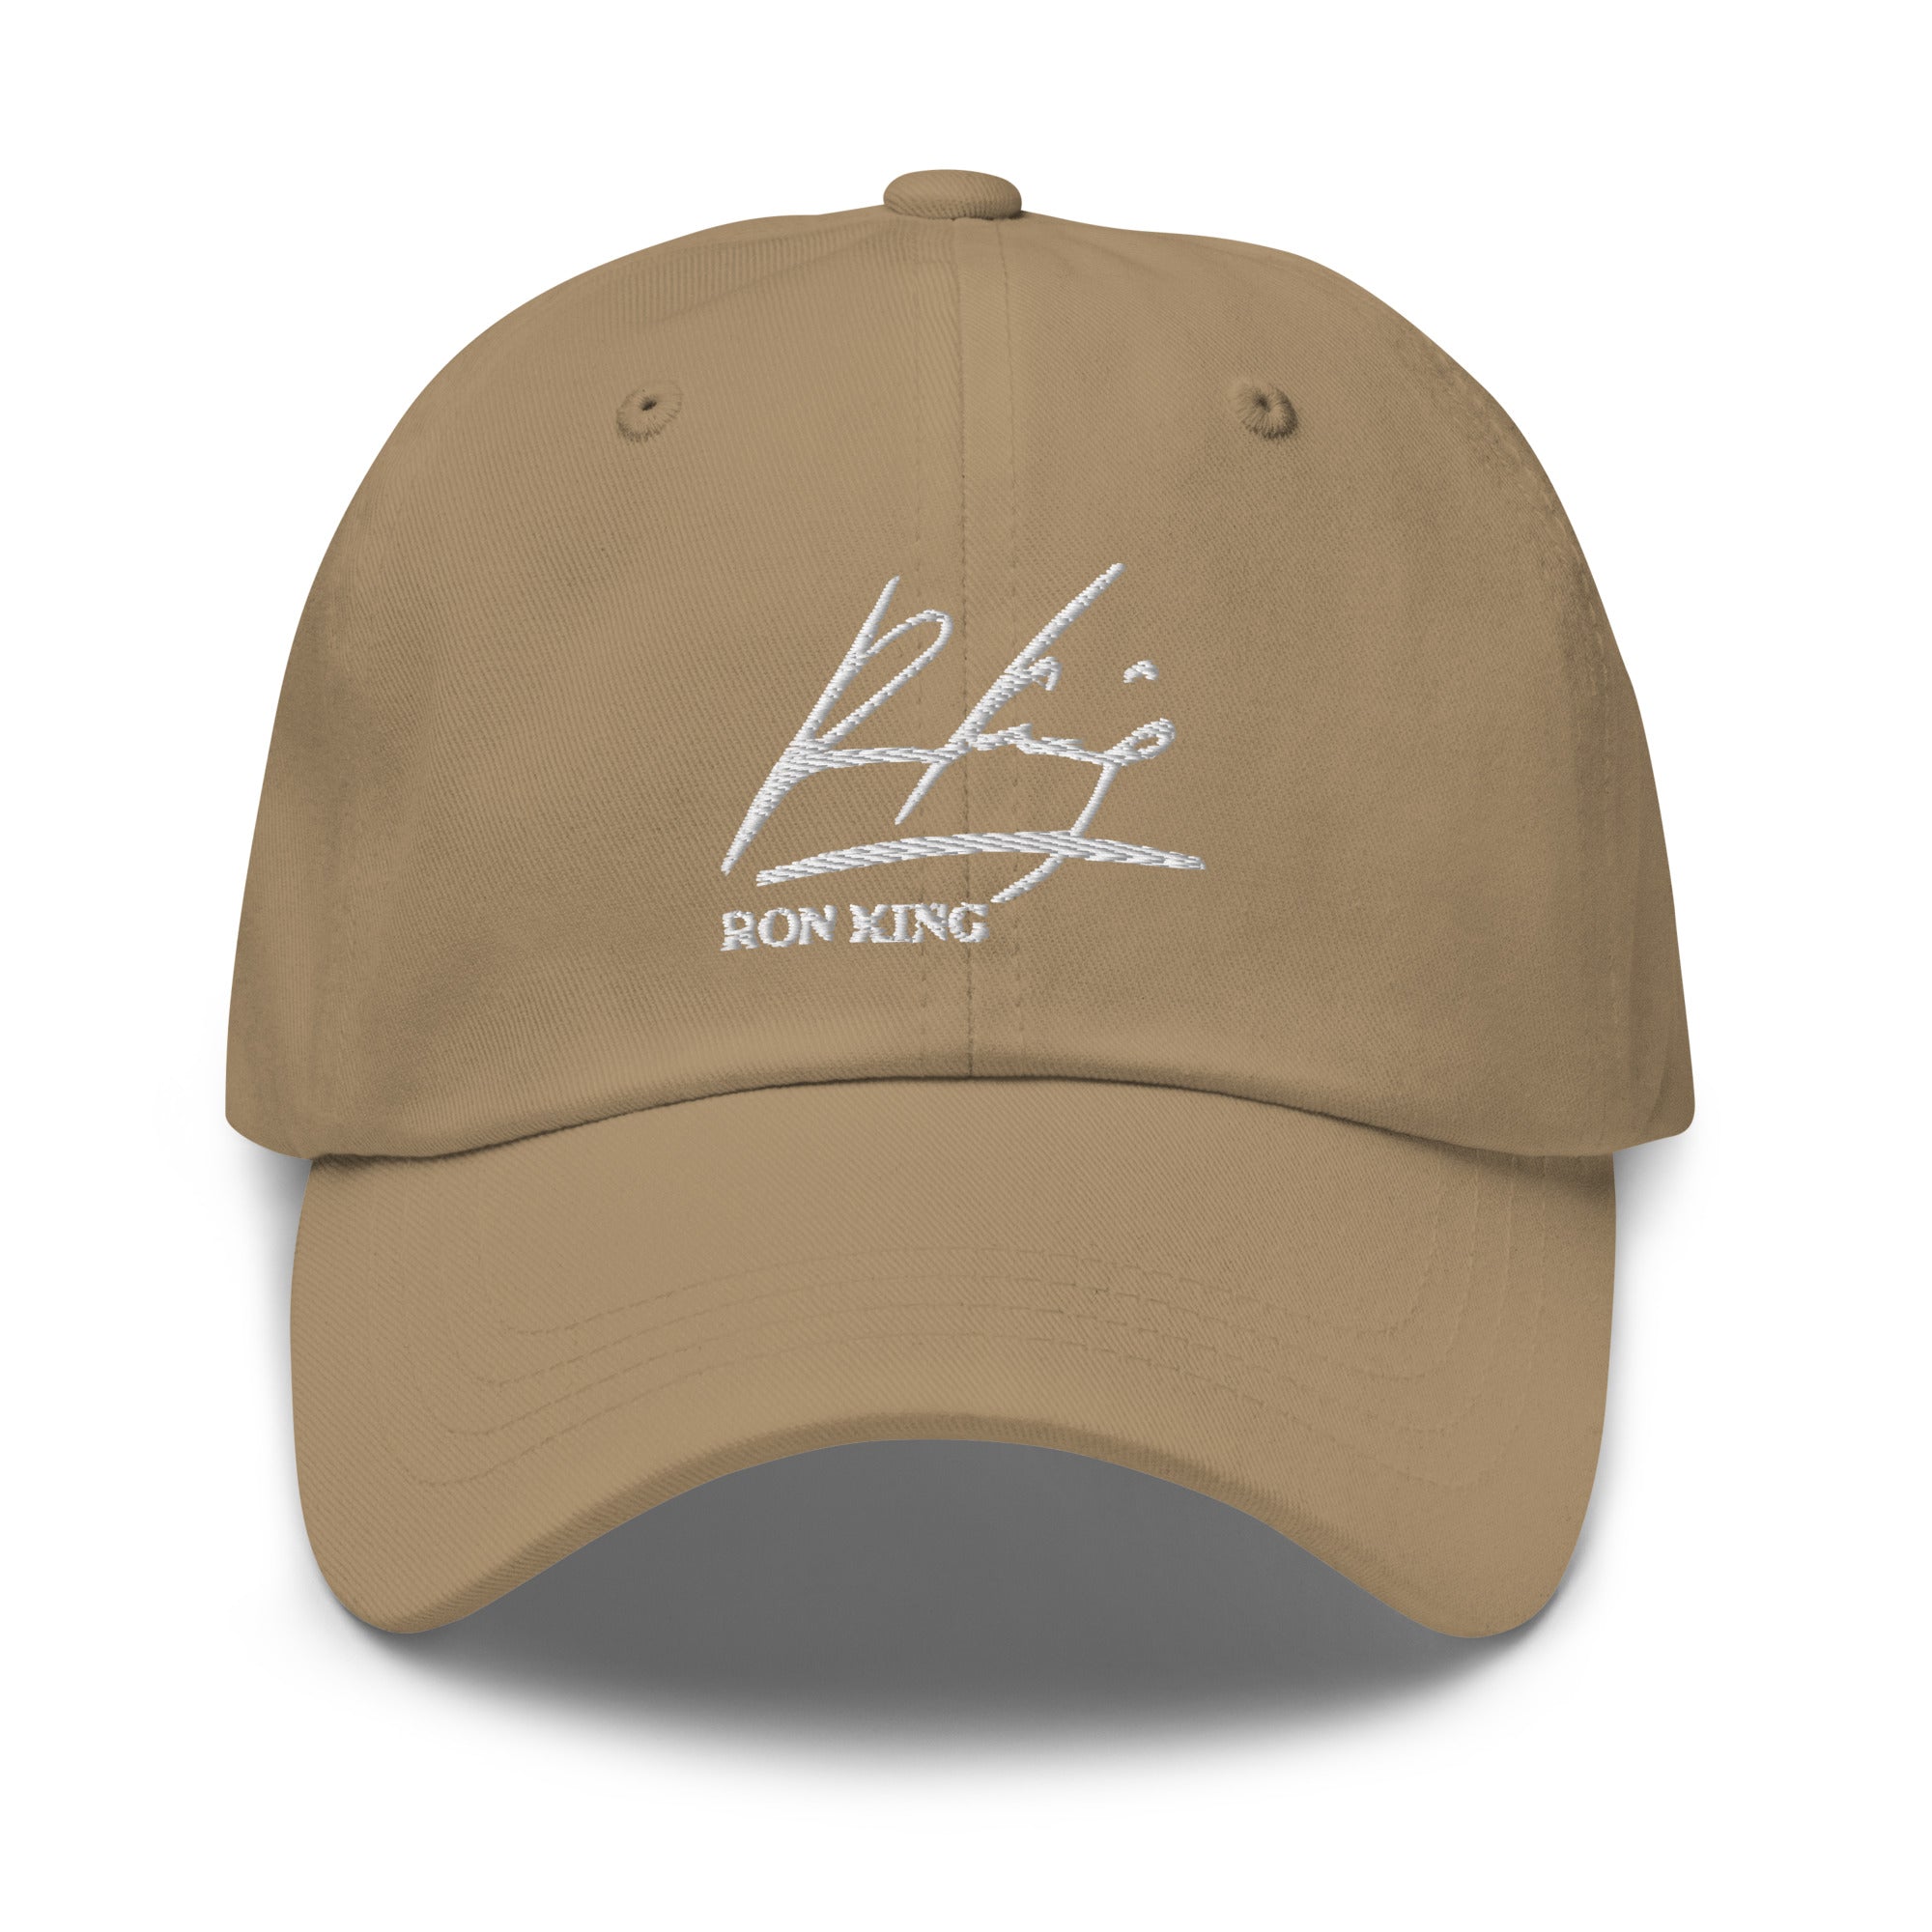 Ron King - hat